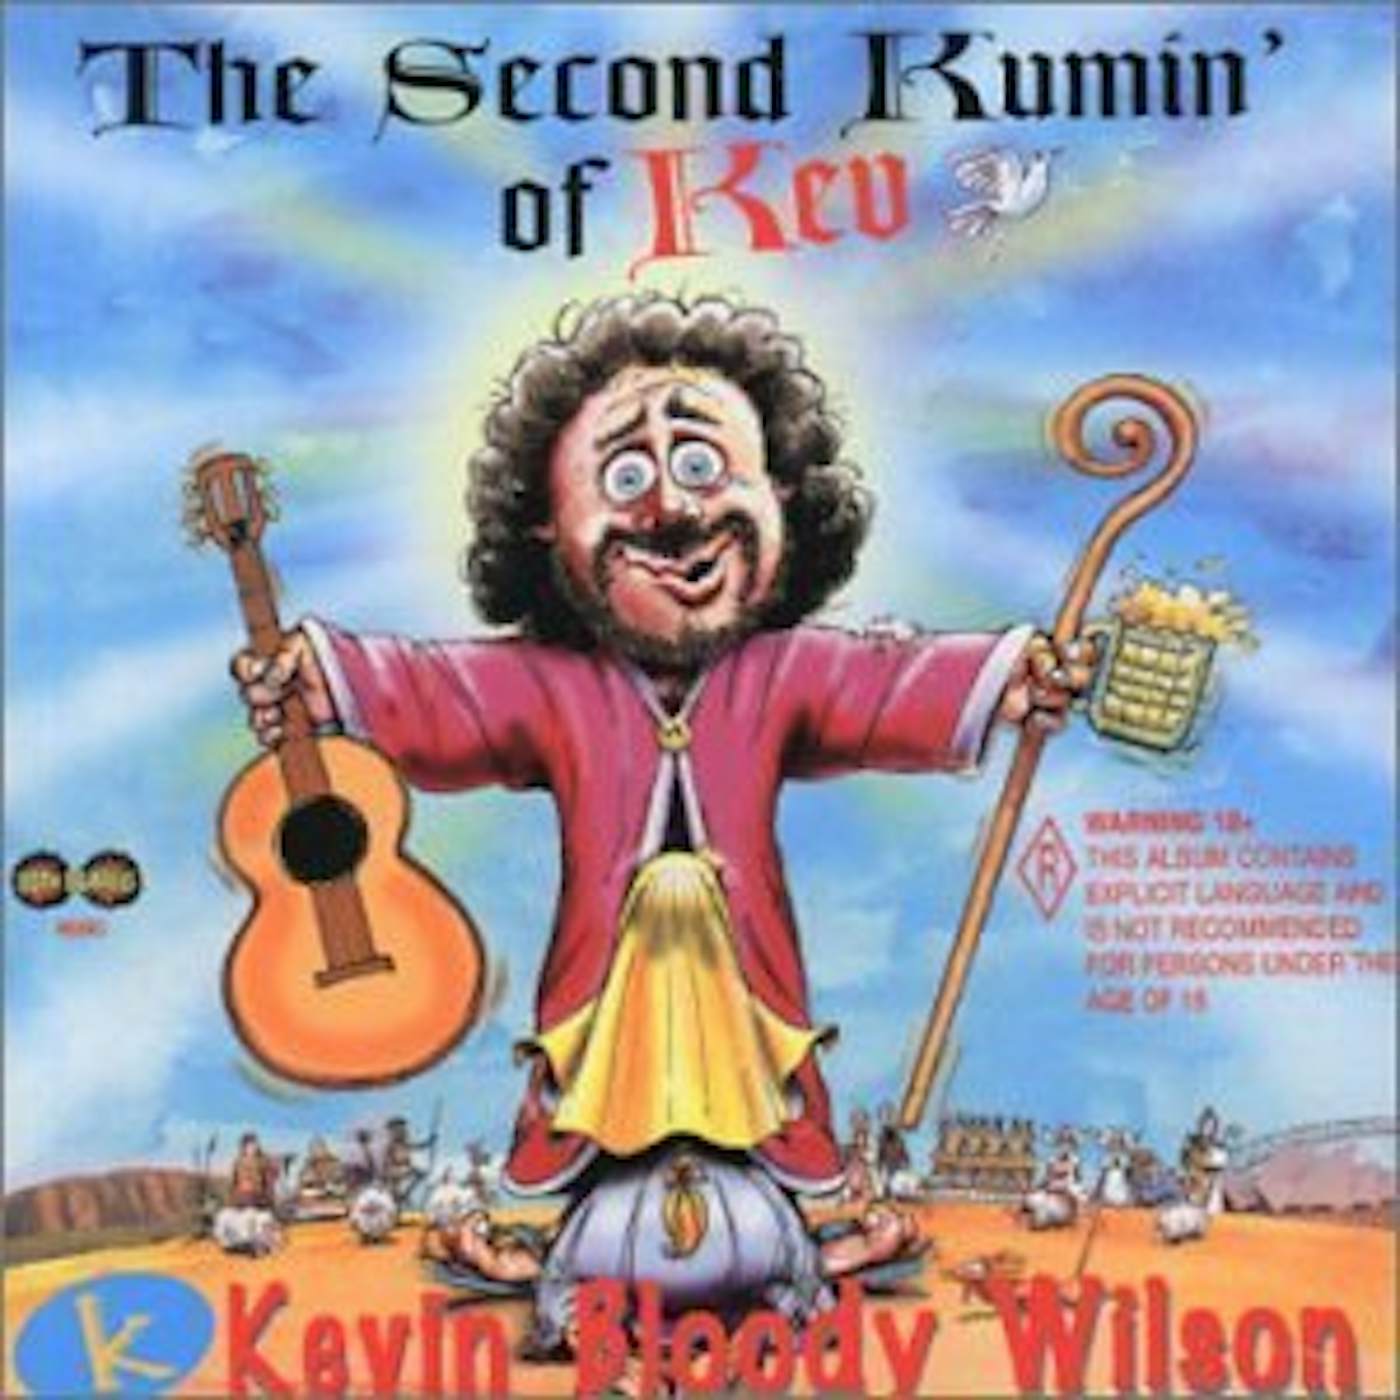 Kevin Bloody Wilson SECOND KUMMIN OF KEV CD